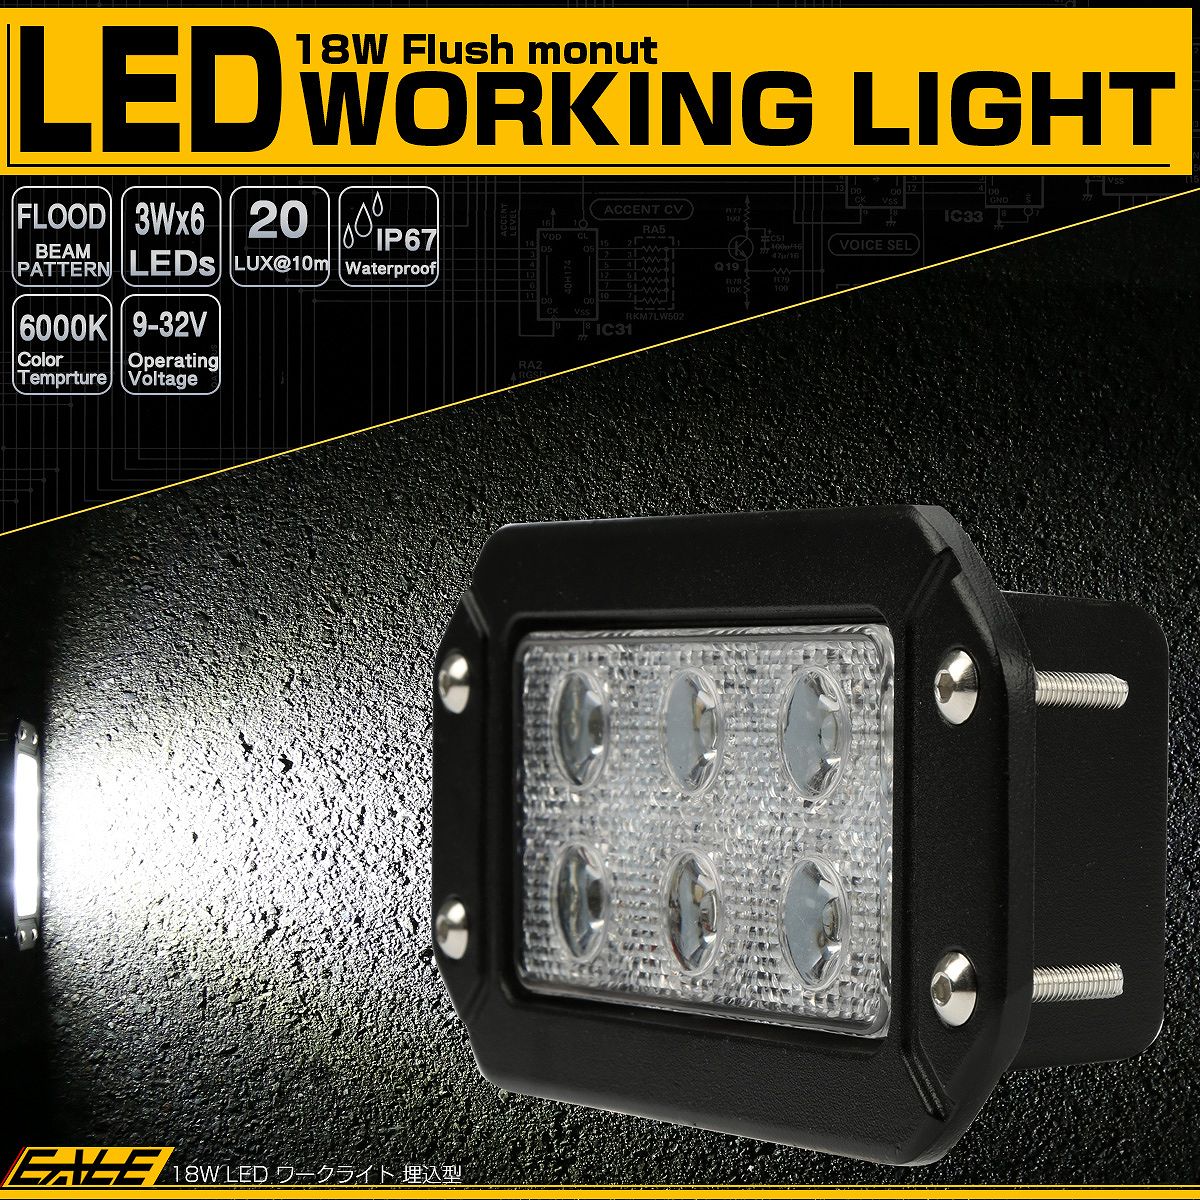 LED ワークライト 作業灯 埋め込み型 18W 角型 フォグランプ バックランプ 補助灯 12V 24V 防水 IP67 P-548